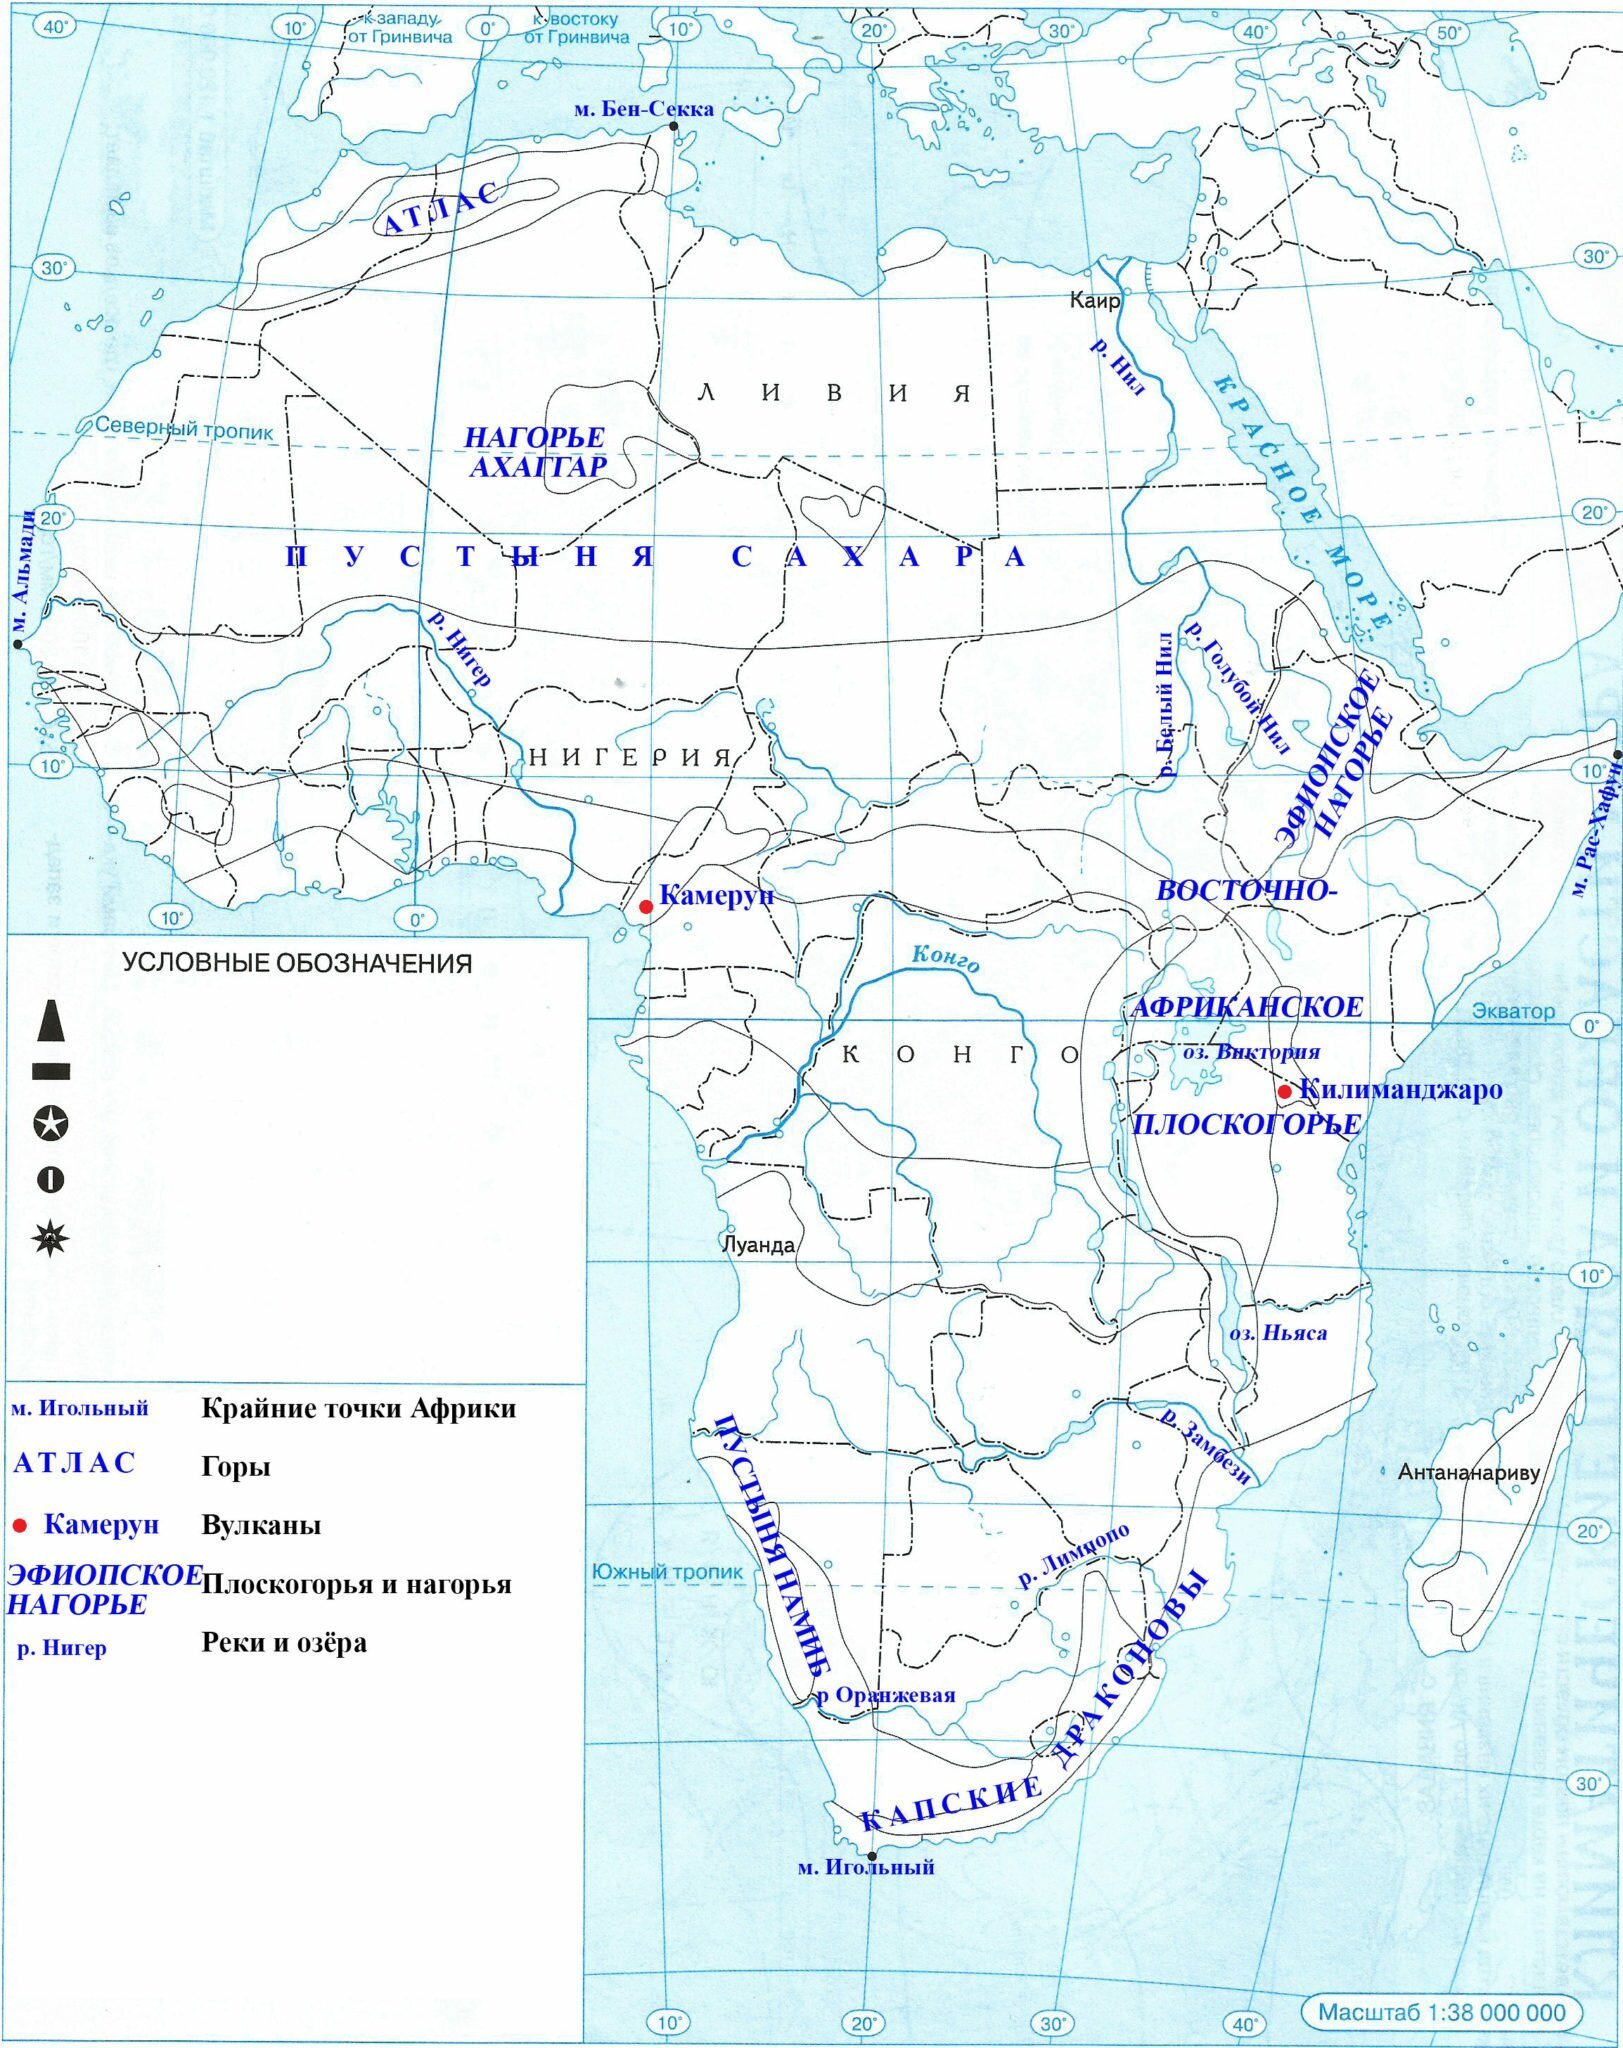 Контурная карта 7 класс страница 21. Контурная карта по географии Африка. Реки Африки на контурной карте 7 класс. Контурная карта география 7 кл. Африка. Реки Африки 7 класс география контурная карта.